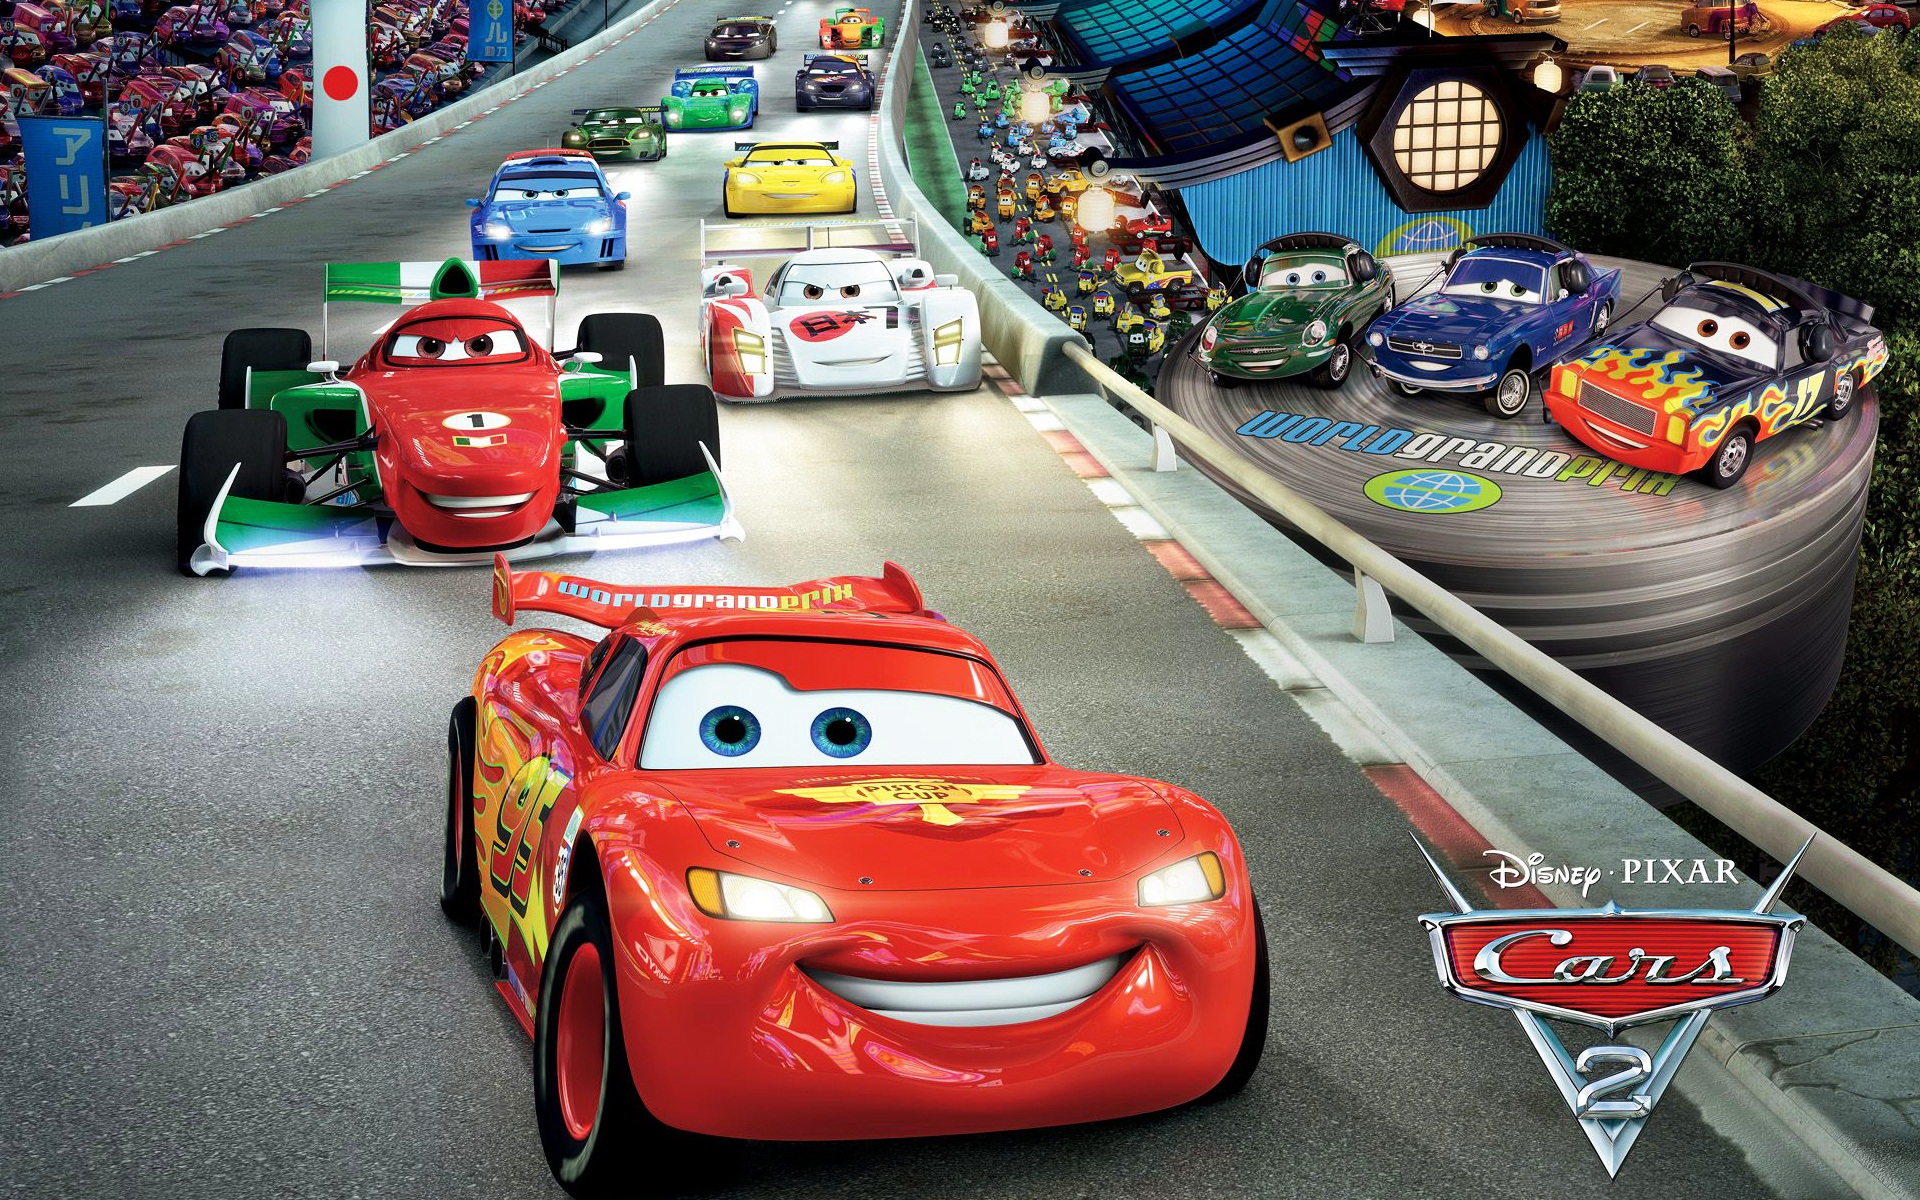 Disney Pixar Cars Image HD Wallpaper And Background Photos